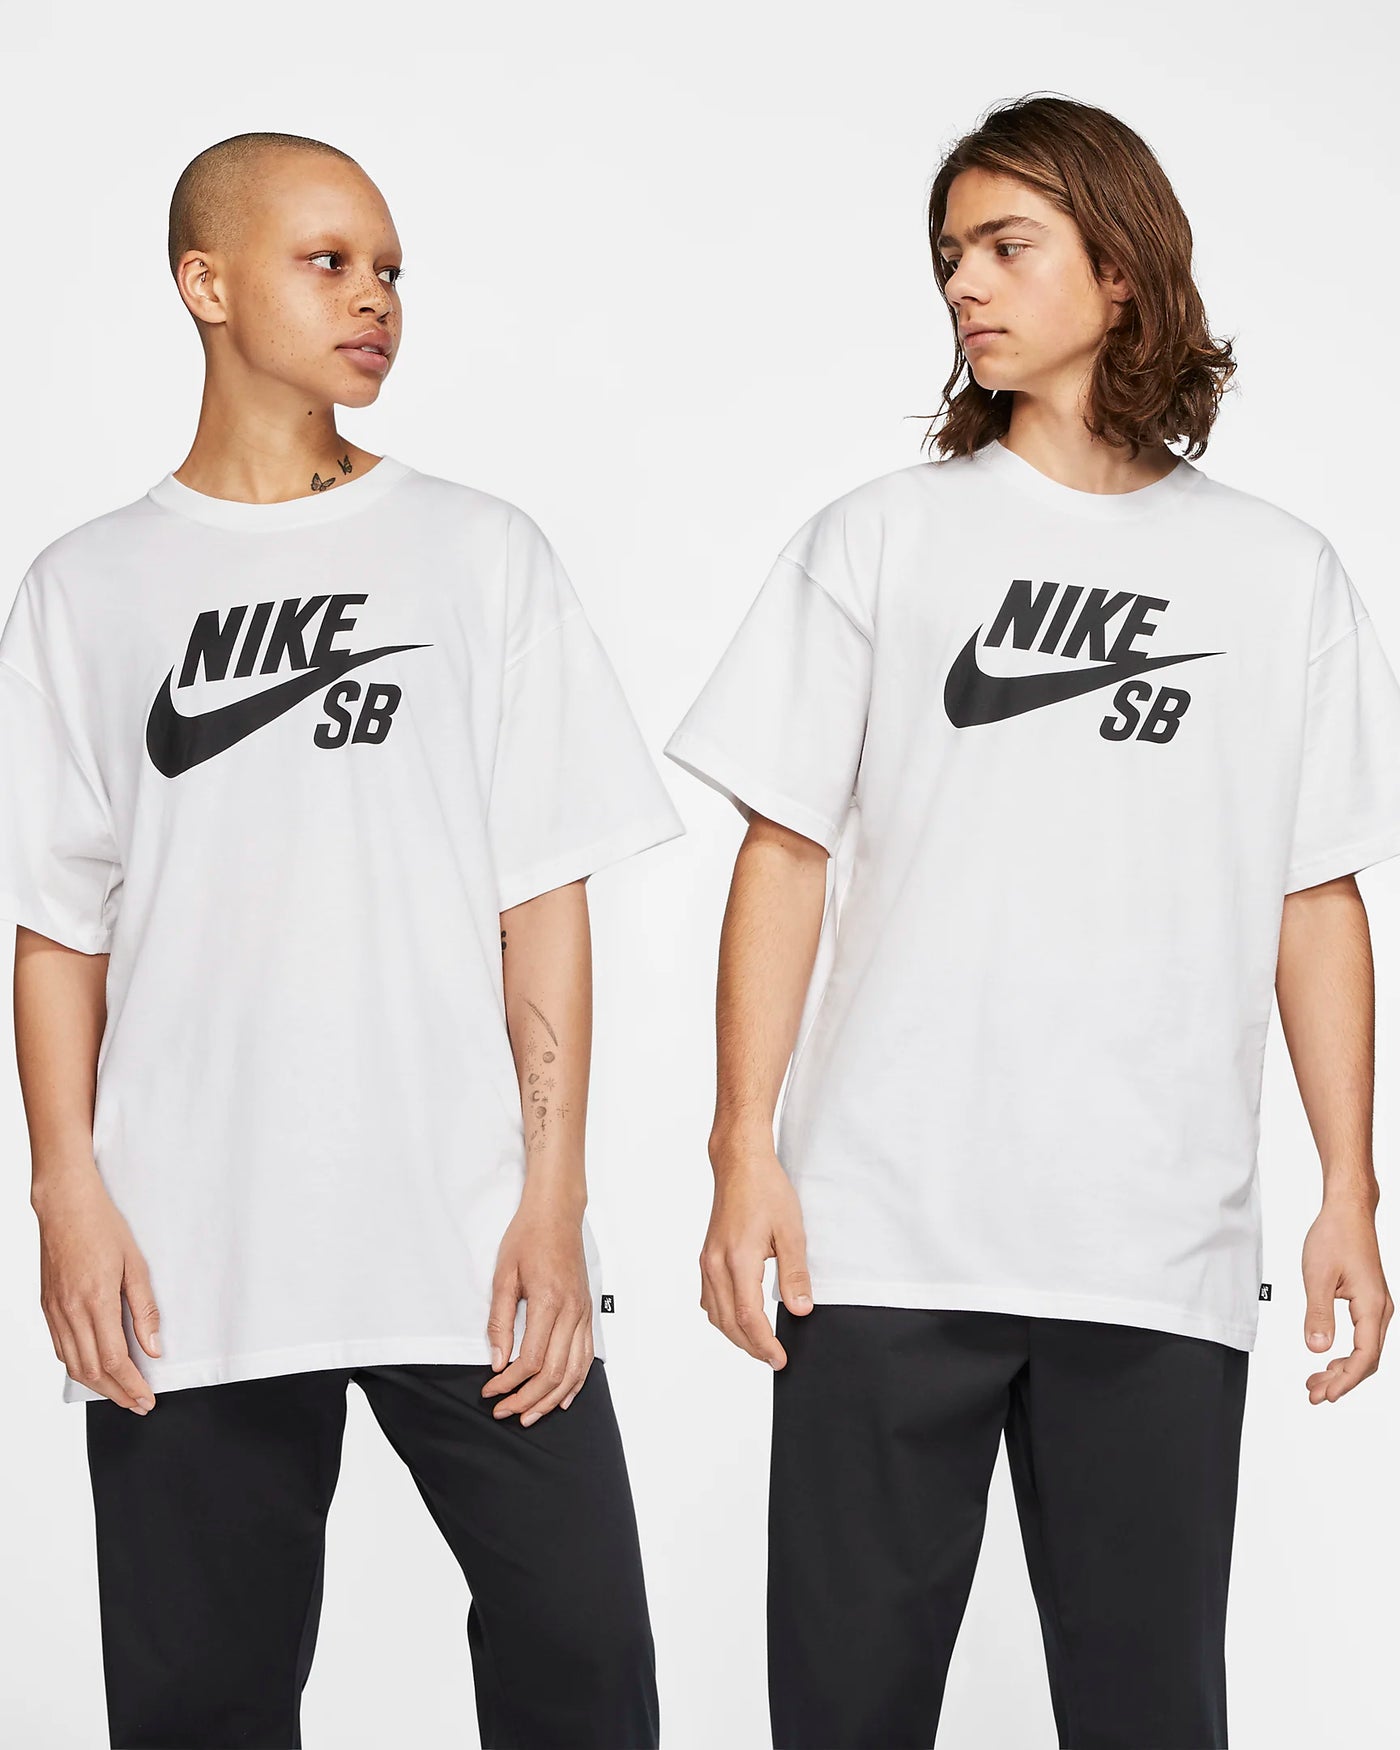 Nike 7539 100 T-Shirt - White